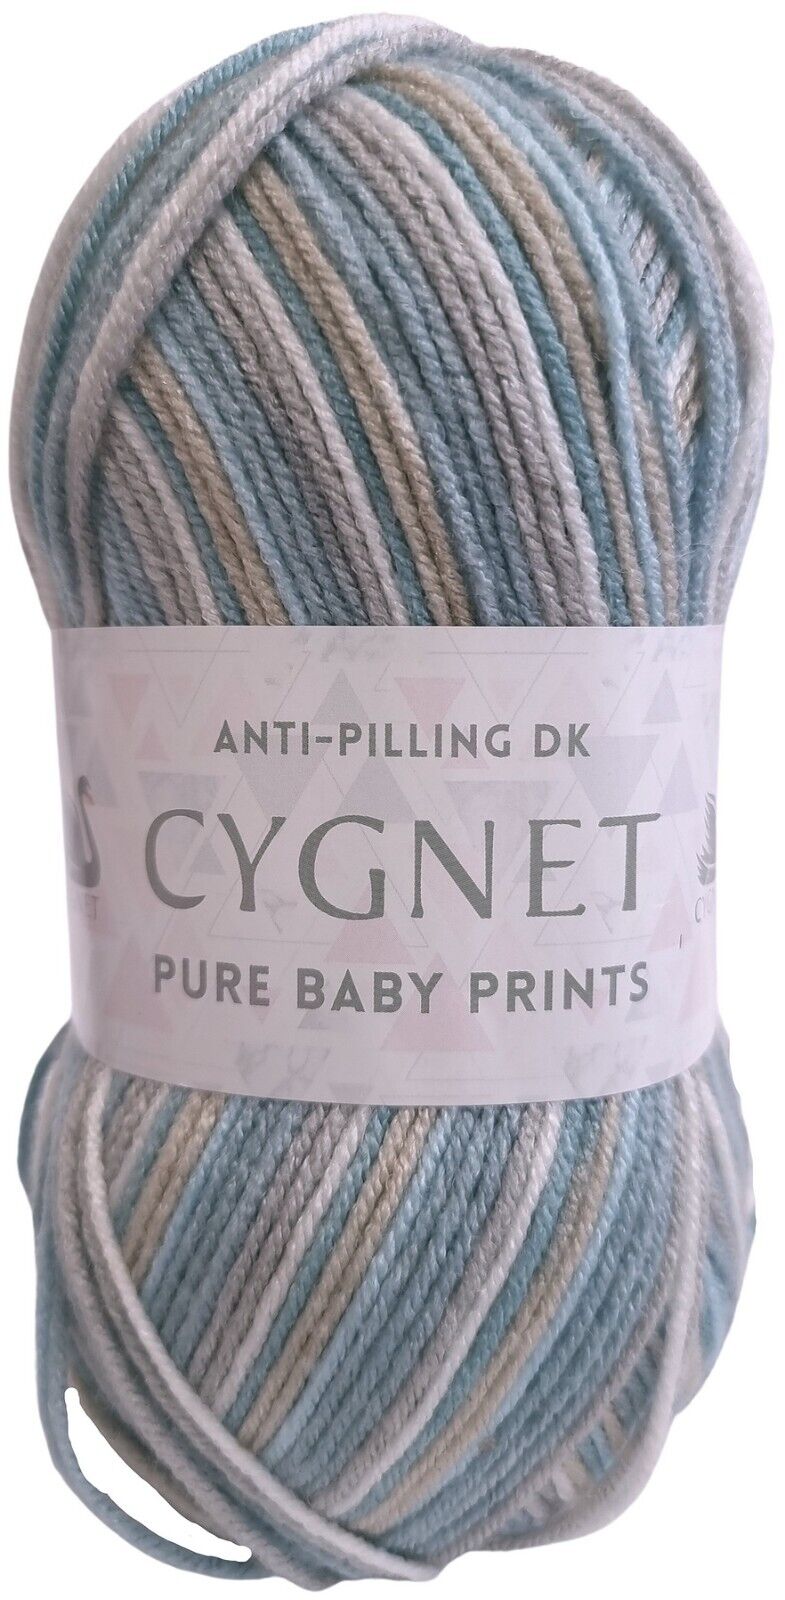 Cygnet PURE BABY PRINTS DK Knitting Yarn / Wool - 100g - Ocean Mist